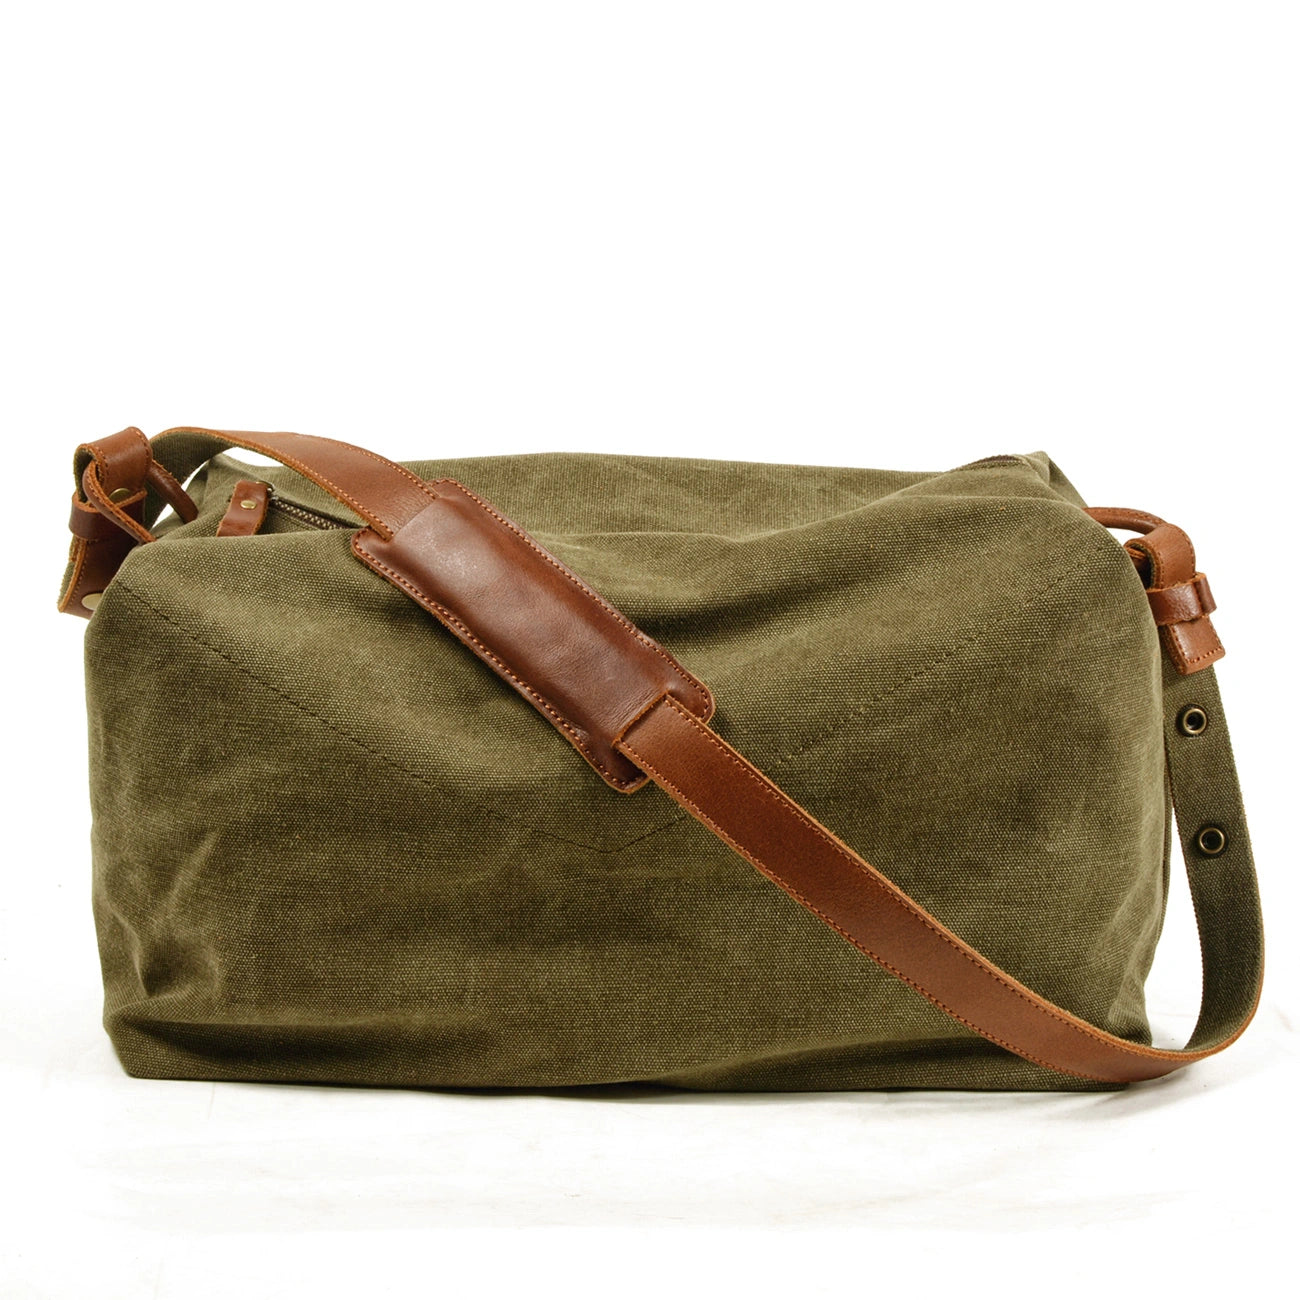 Army Duffle Bag - Military Duffle Bag